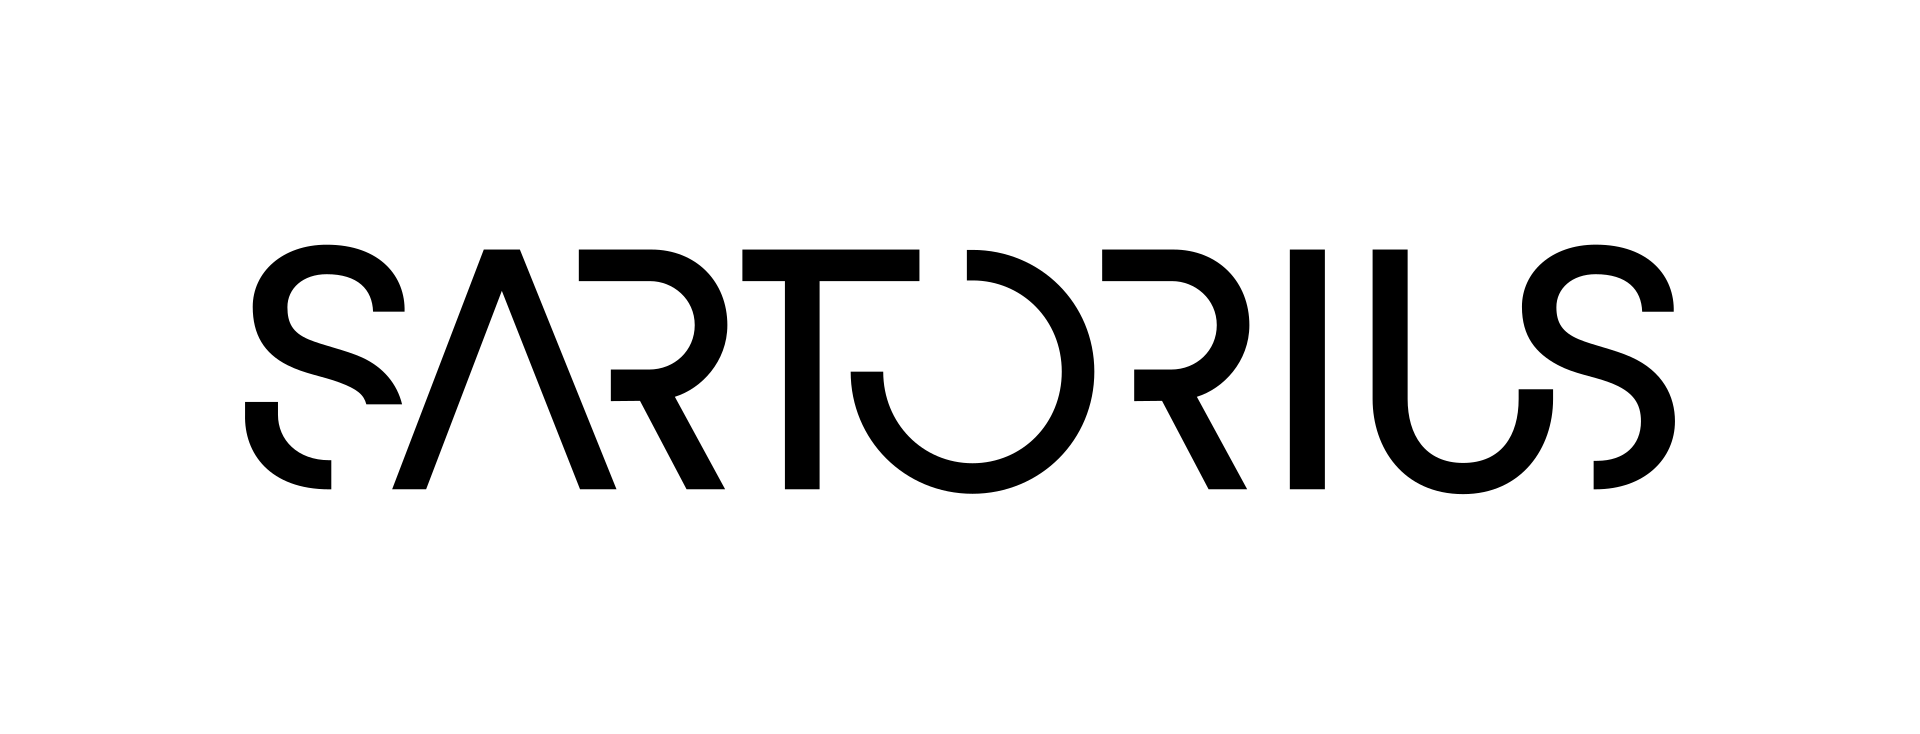 1920px-Sartorius-Logo-2020.png